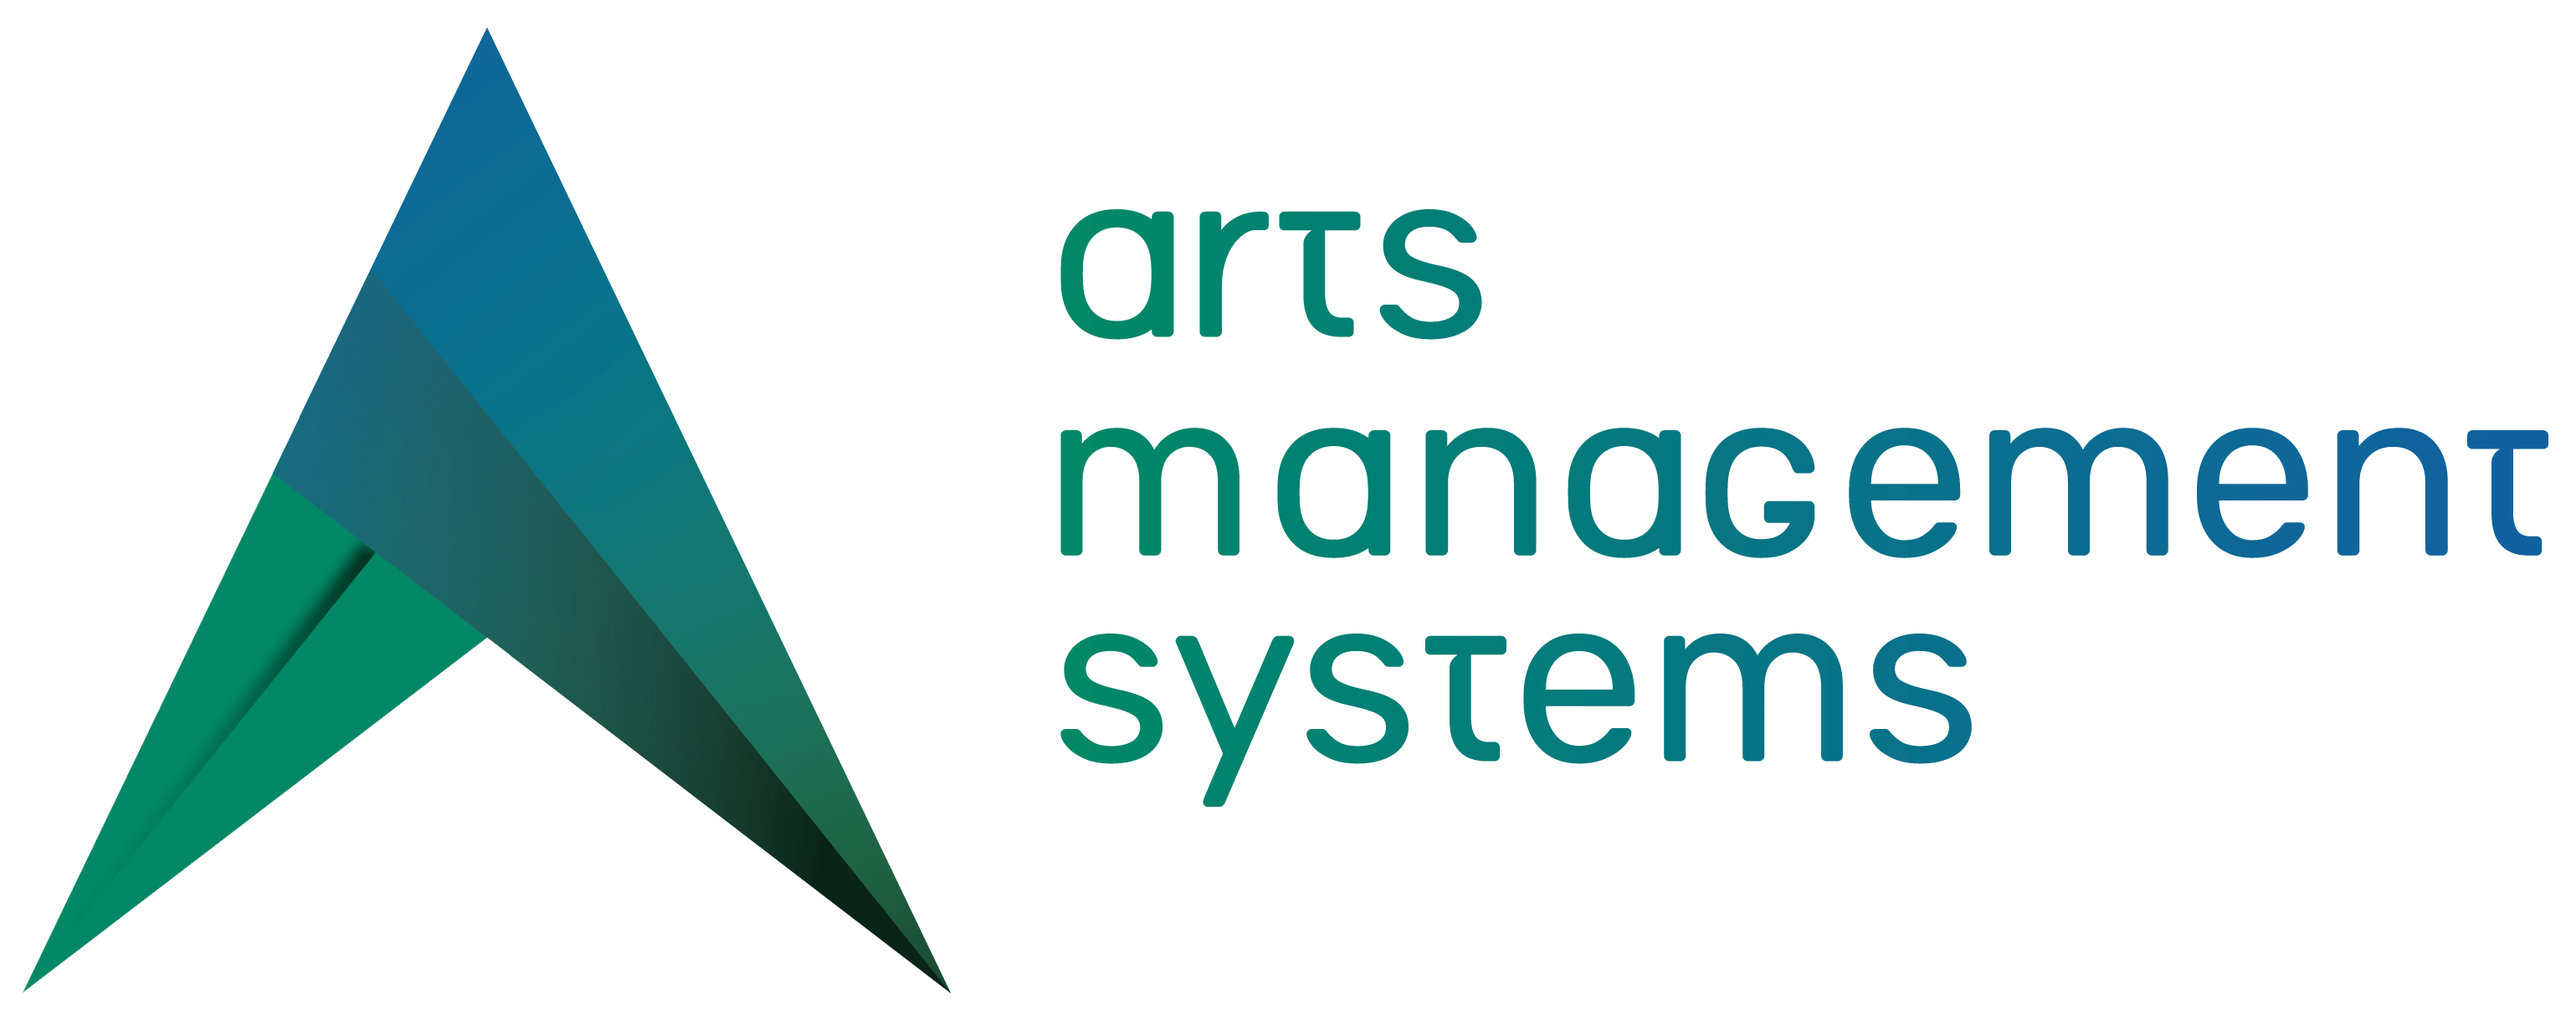 arts management logo